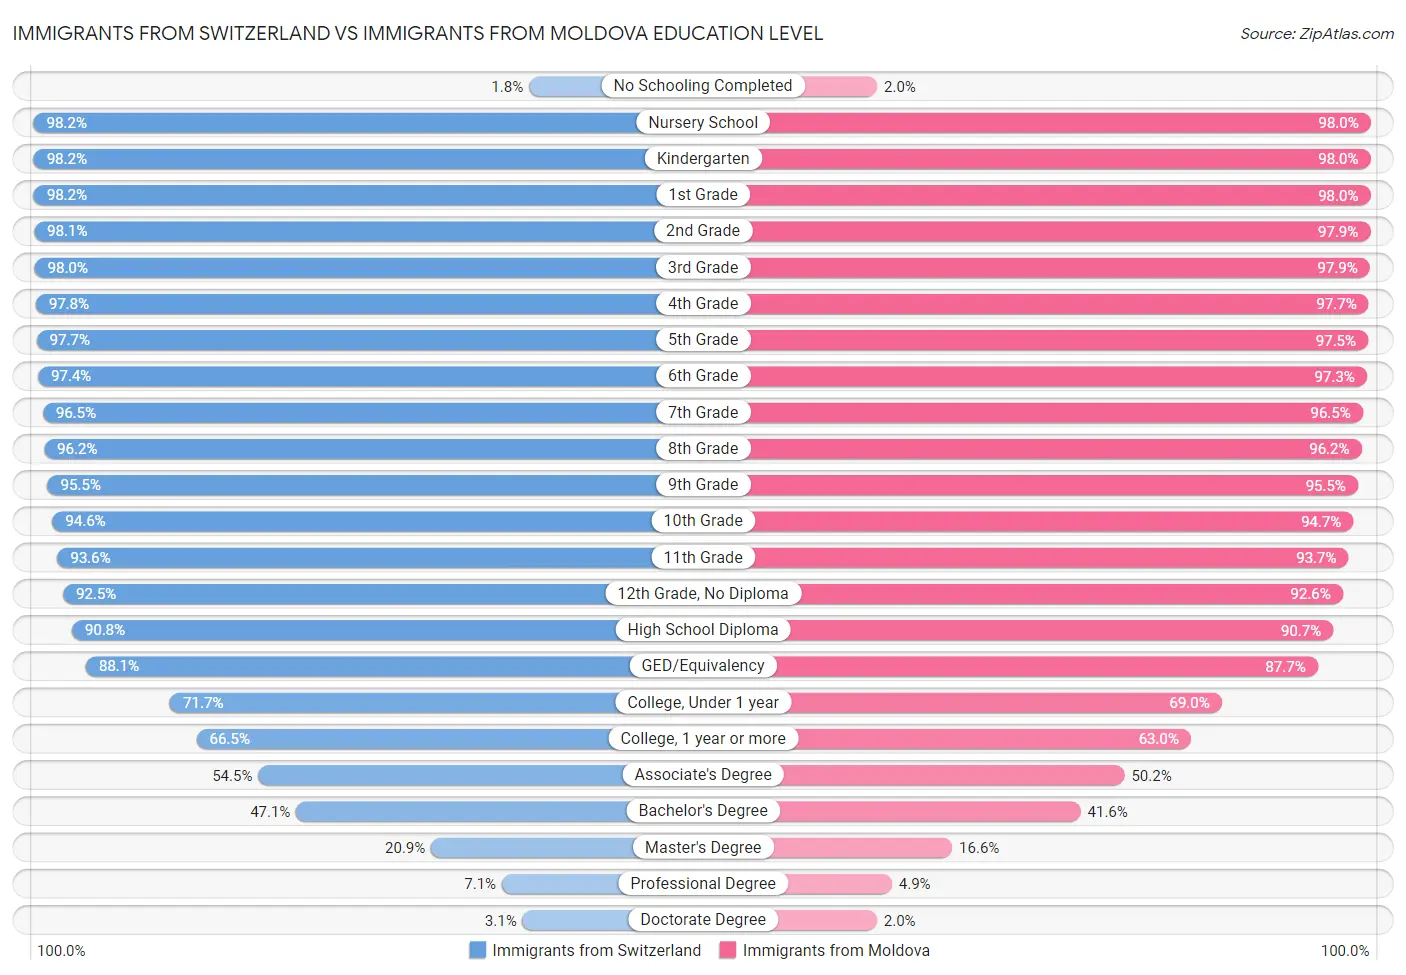 Immigrants from Switzerland vs Immigrants from Moldova Education Level